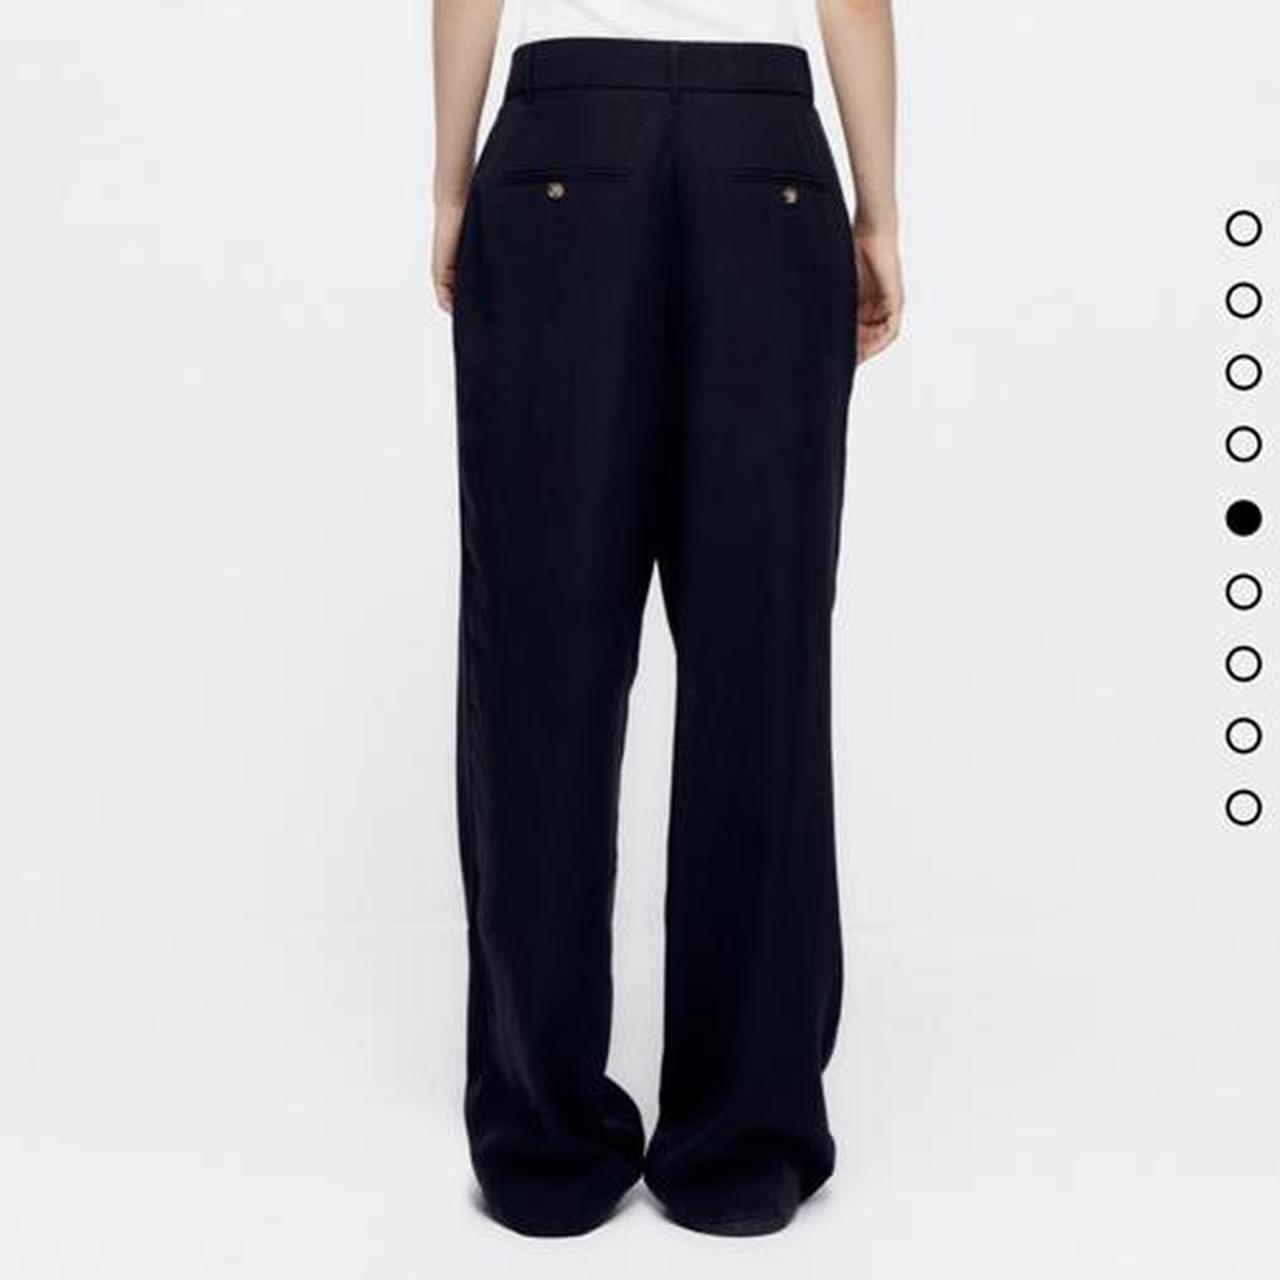 Product Image 3 - Zara black pants
Worn a couple